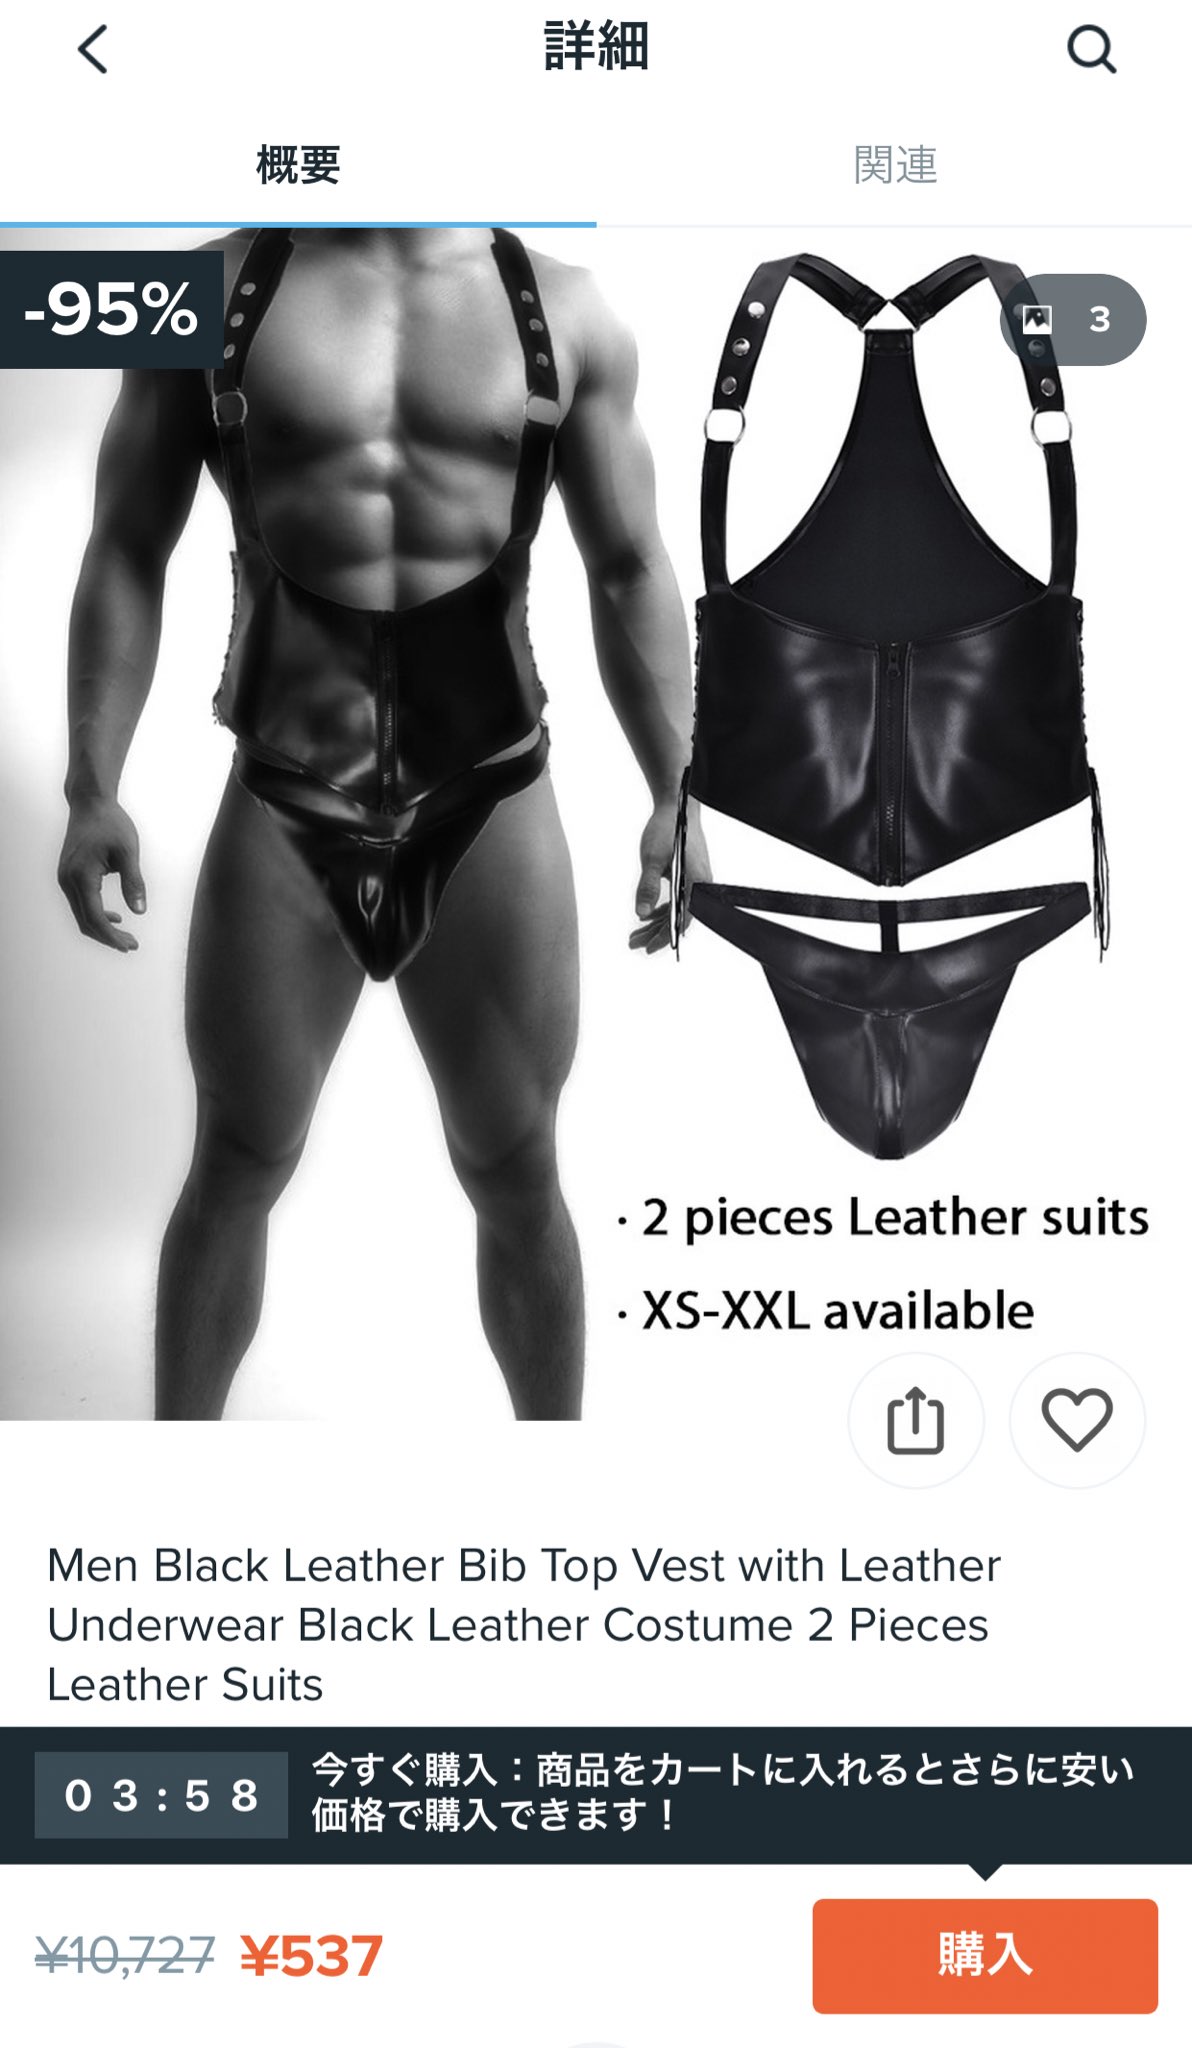 Men Black Leather Bib Top Vest with Leather Underwear Black